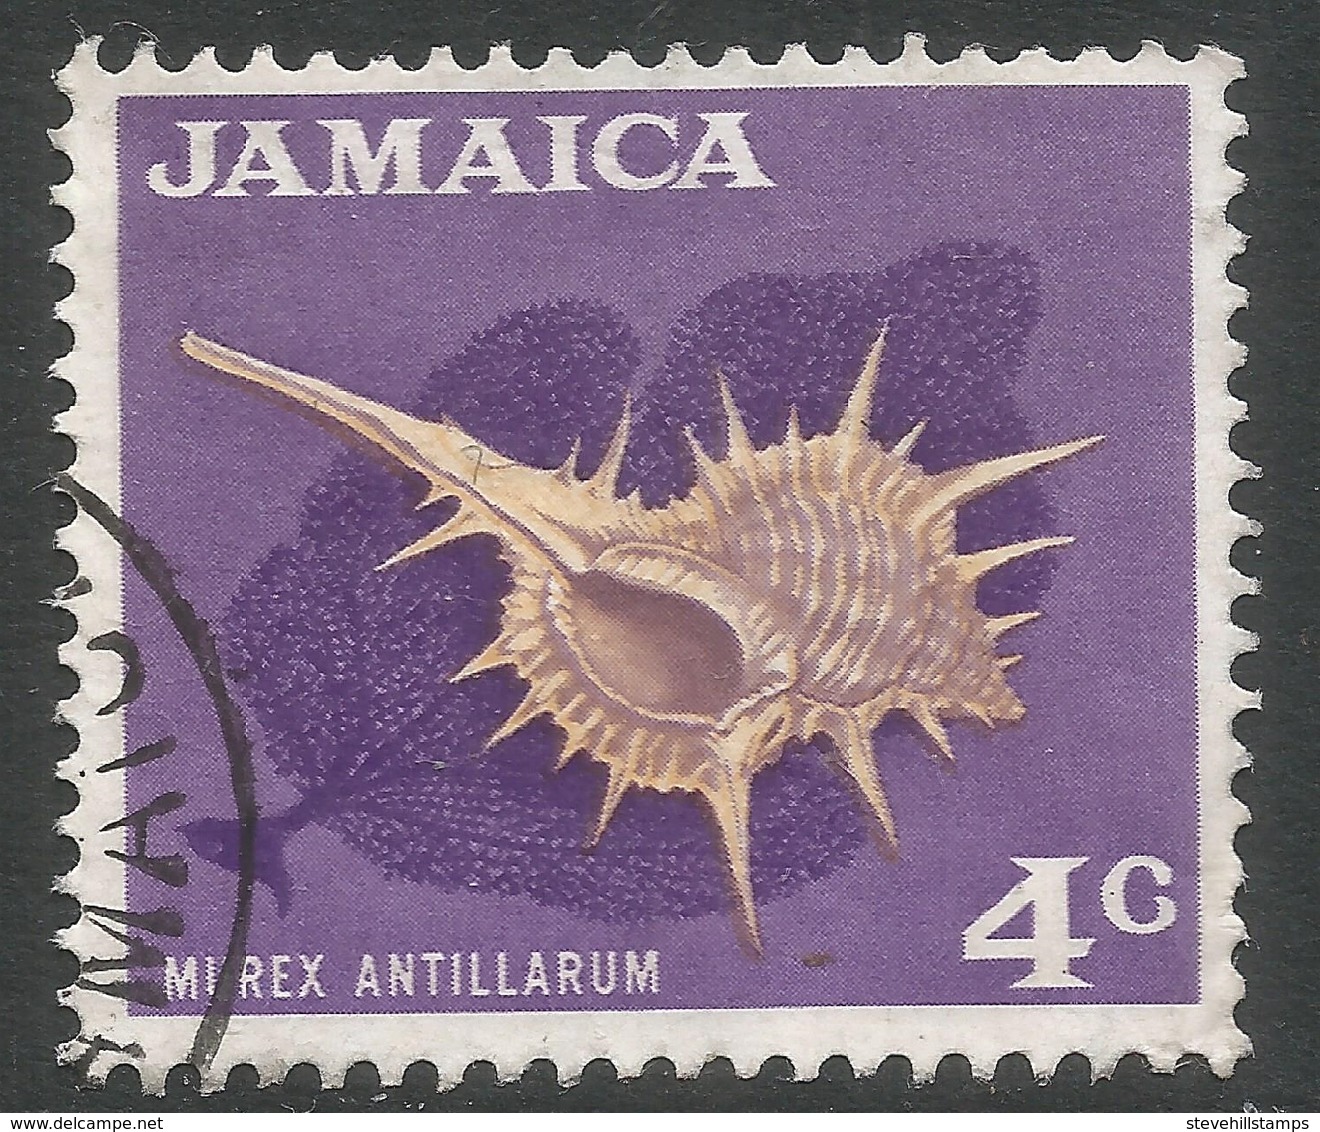 Jamaica. 1970 Definitives. 4c Used. SG 310 - Jamaica (1962-...)